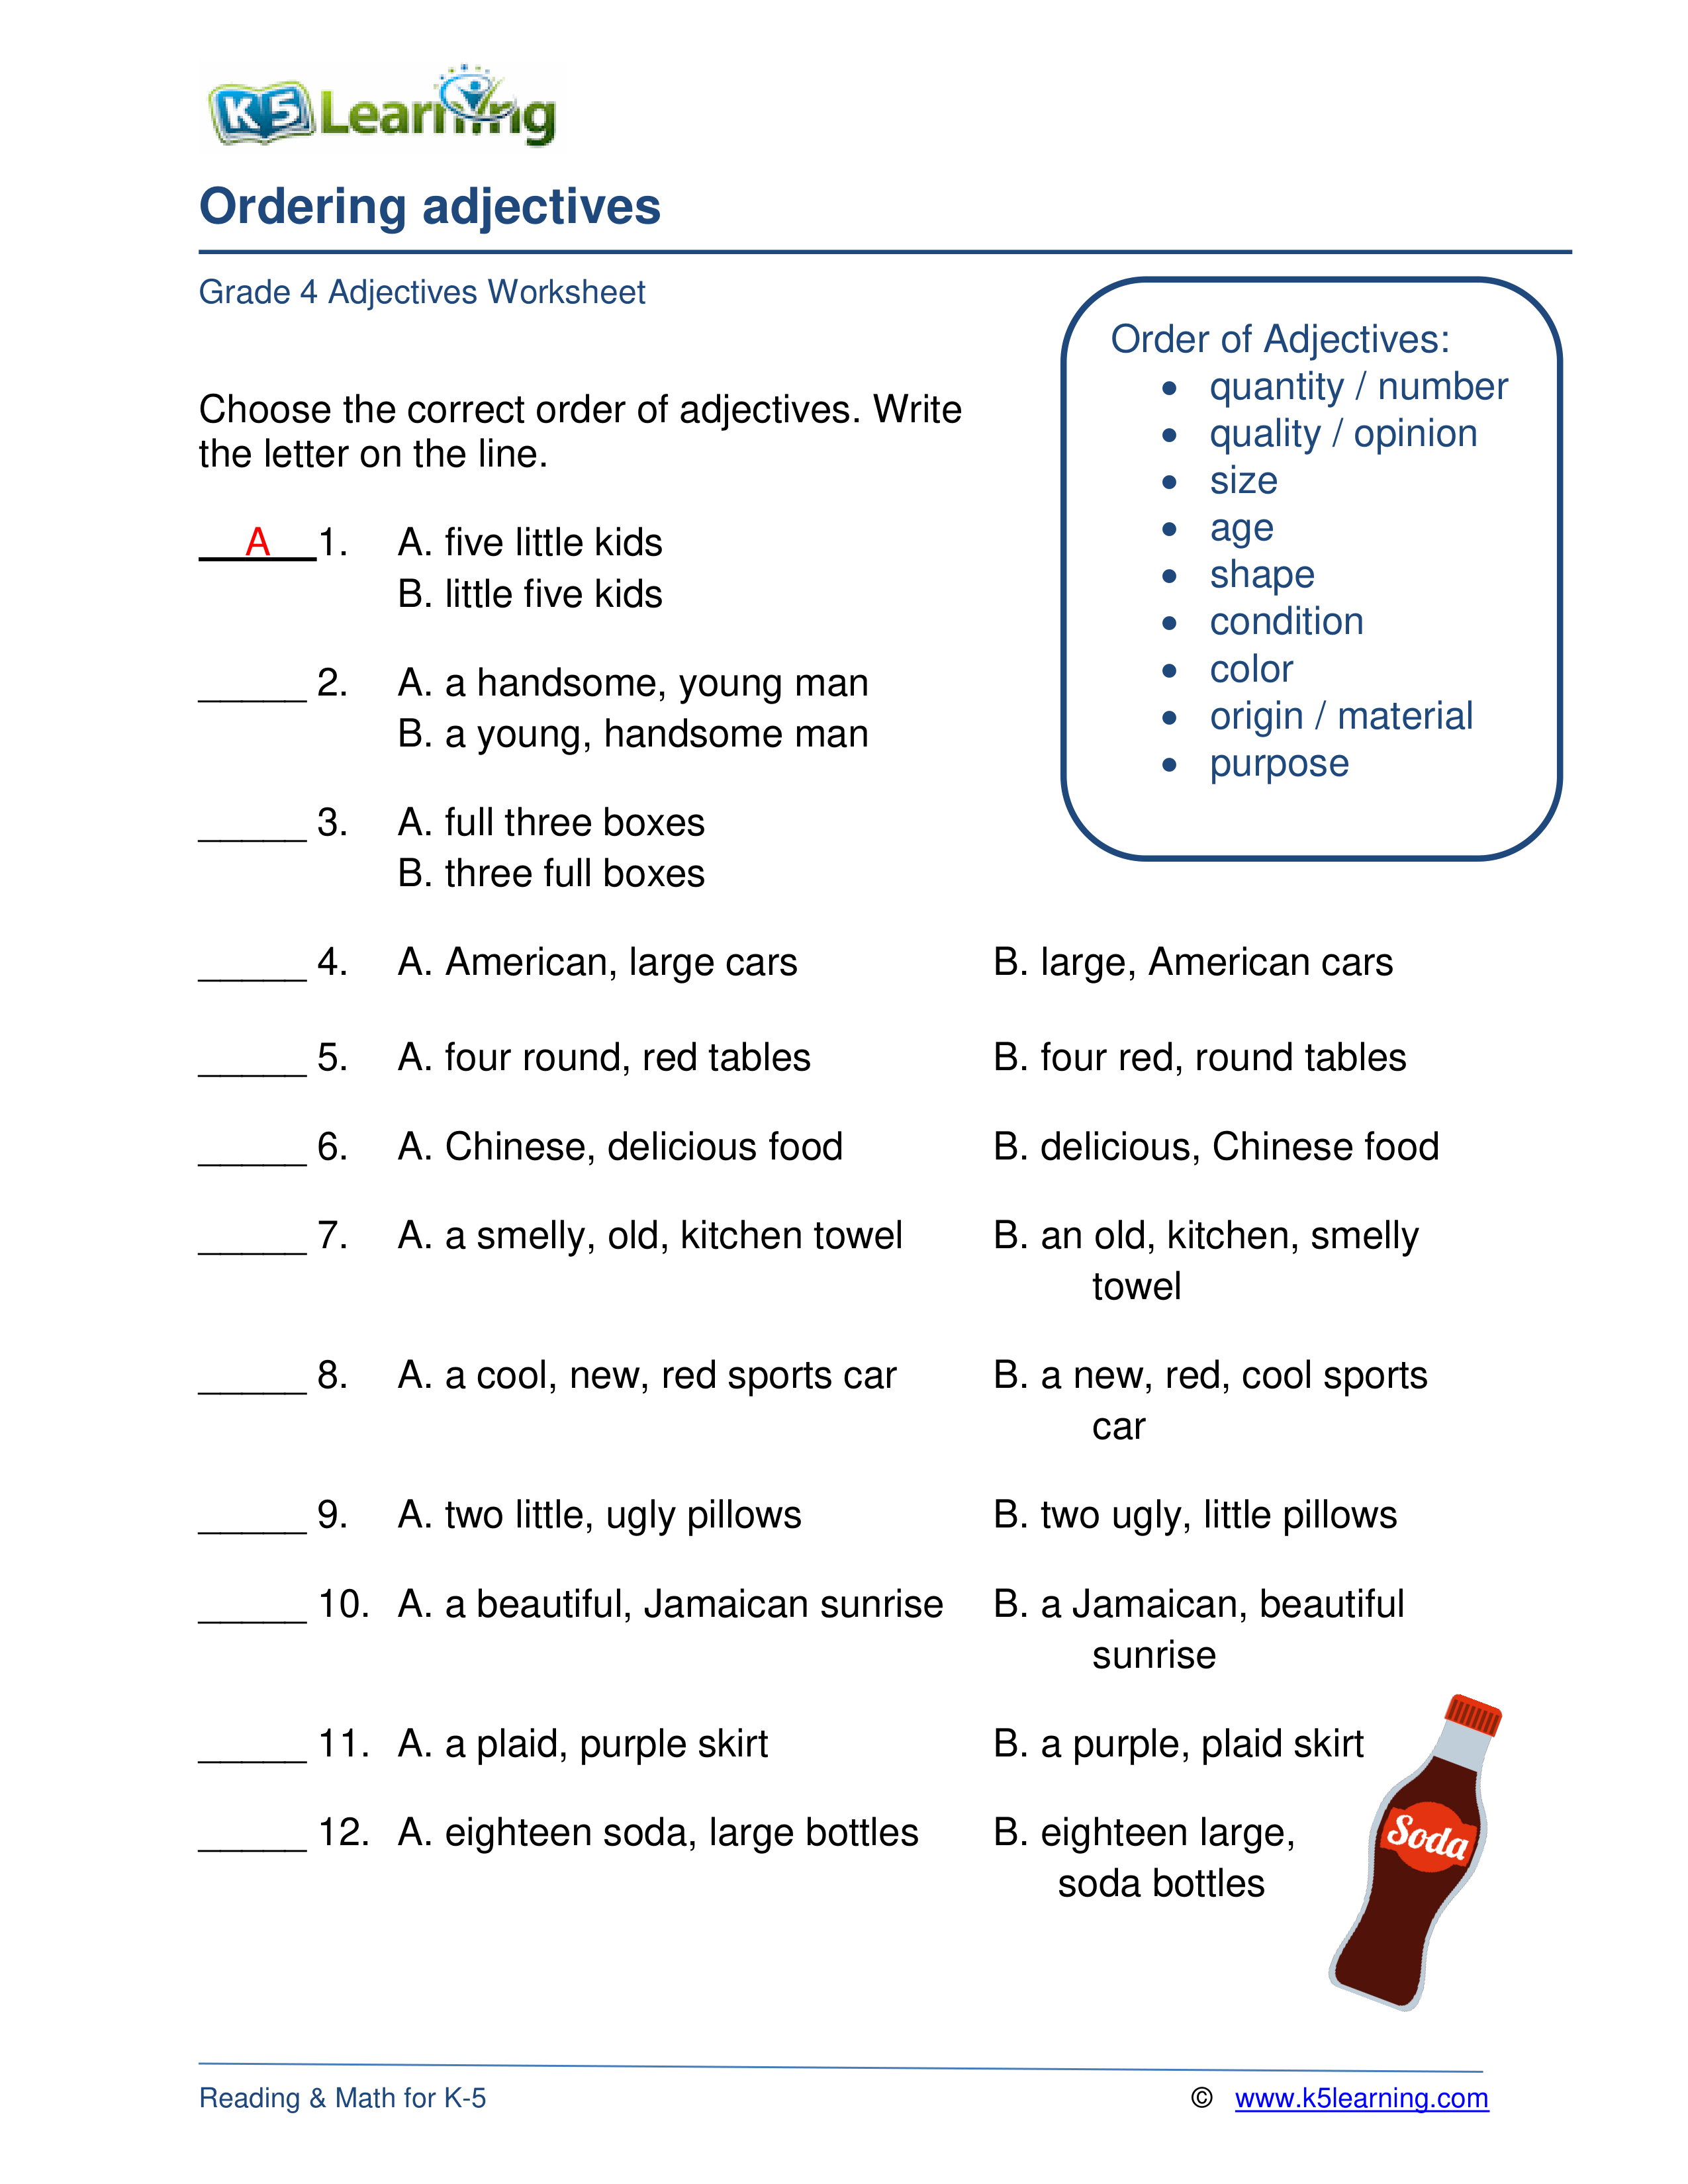 adjective-or-adverb-worksheets-8th-grade-adverbworksheets